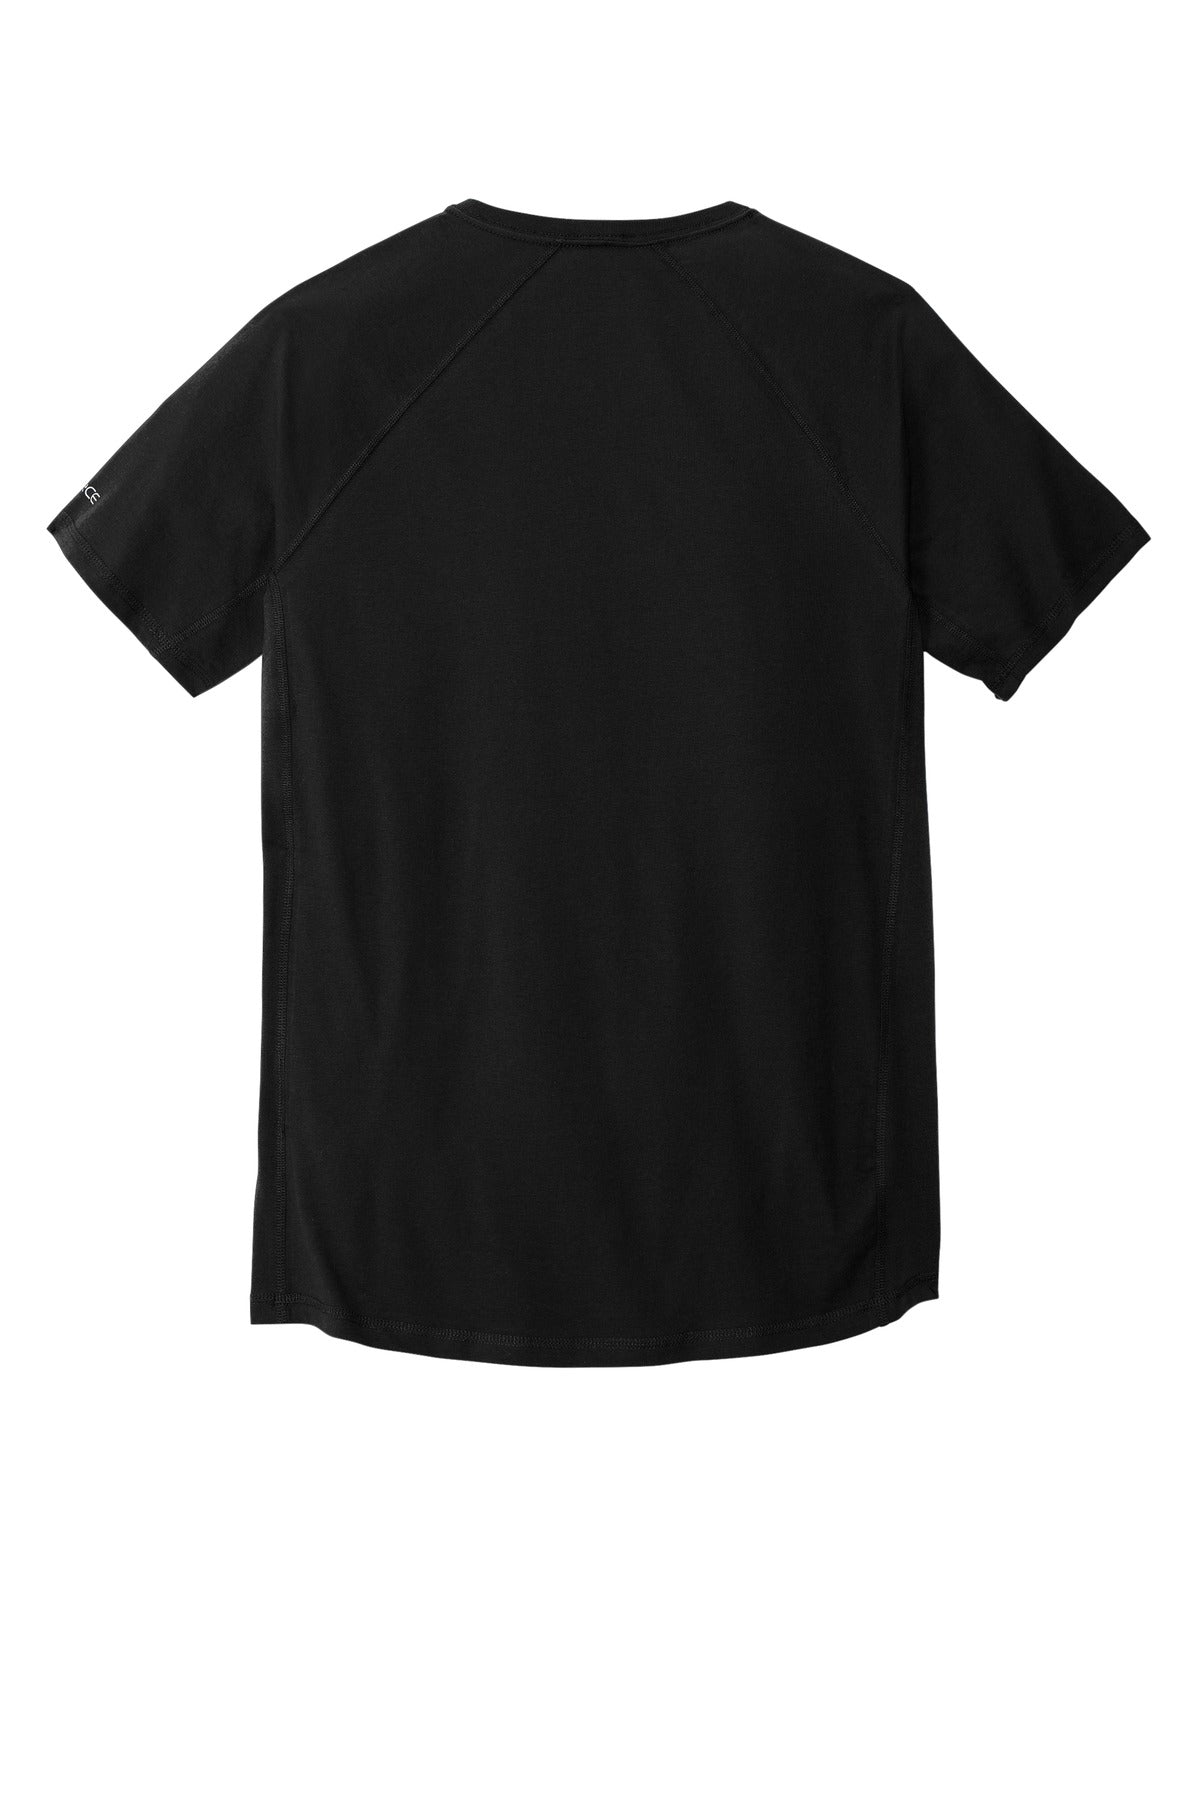 Carhartt Force Short Sleeve Pocket T-Shirt CT104616 - BT Imprintables Shirts